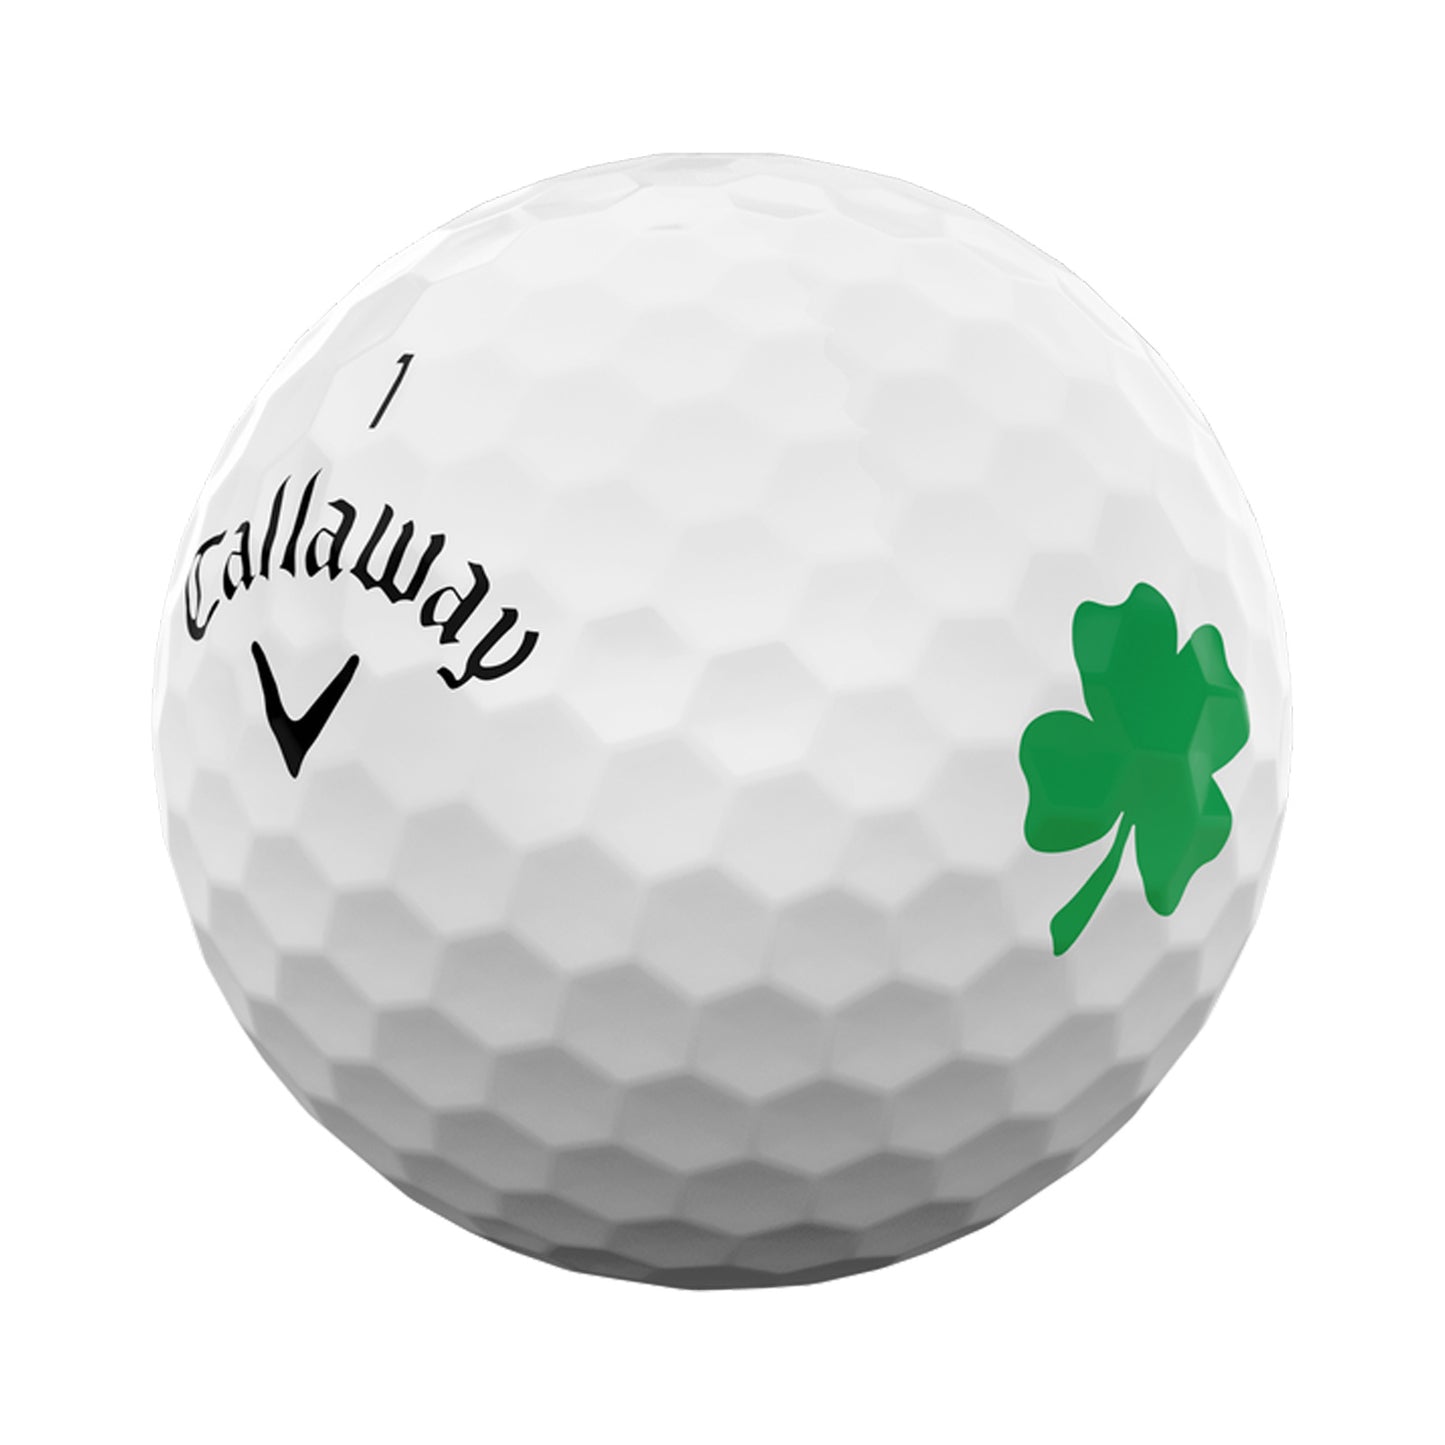 Callaway Supersoft Limited Edition Shamrock Golf Balls